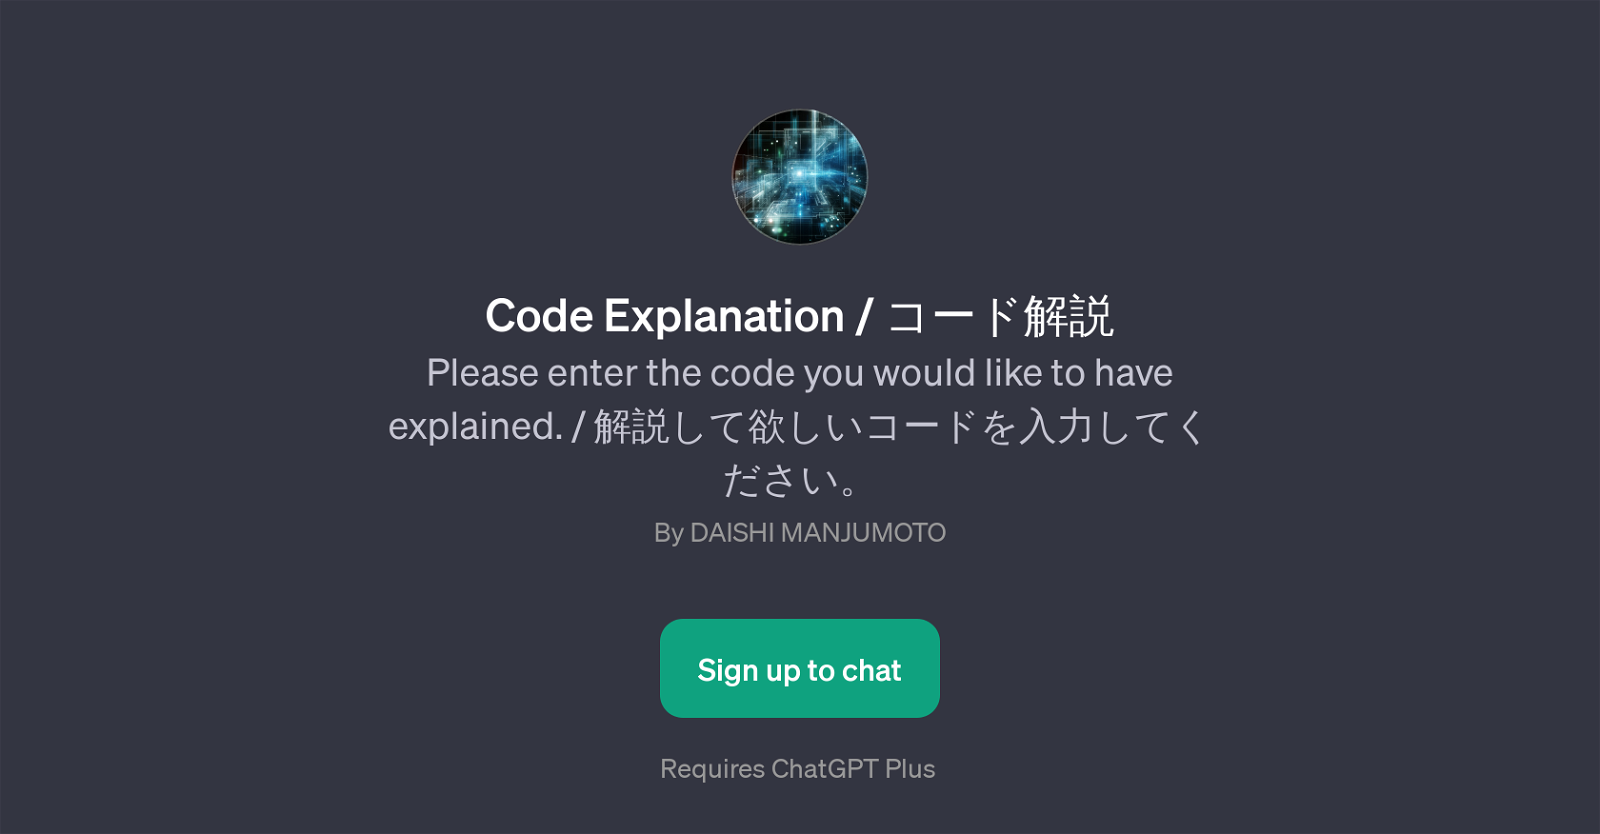 Code Explanation website